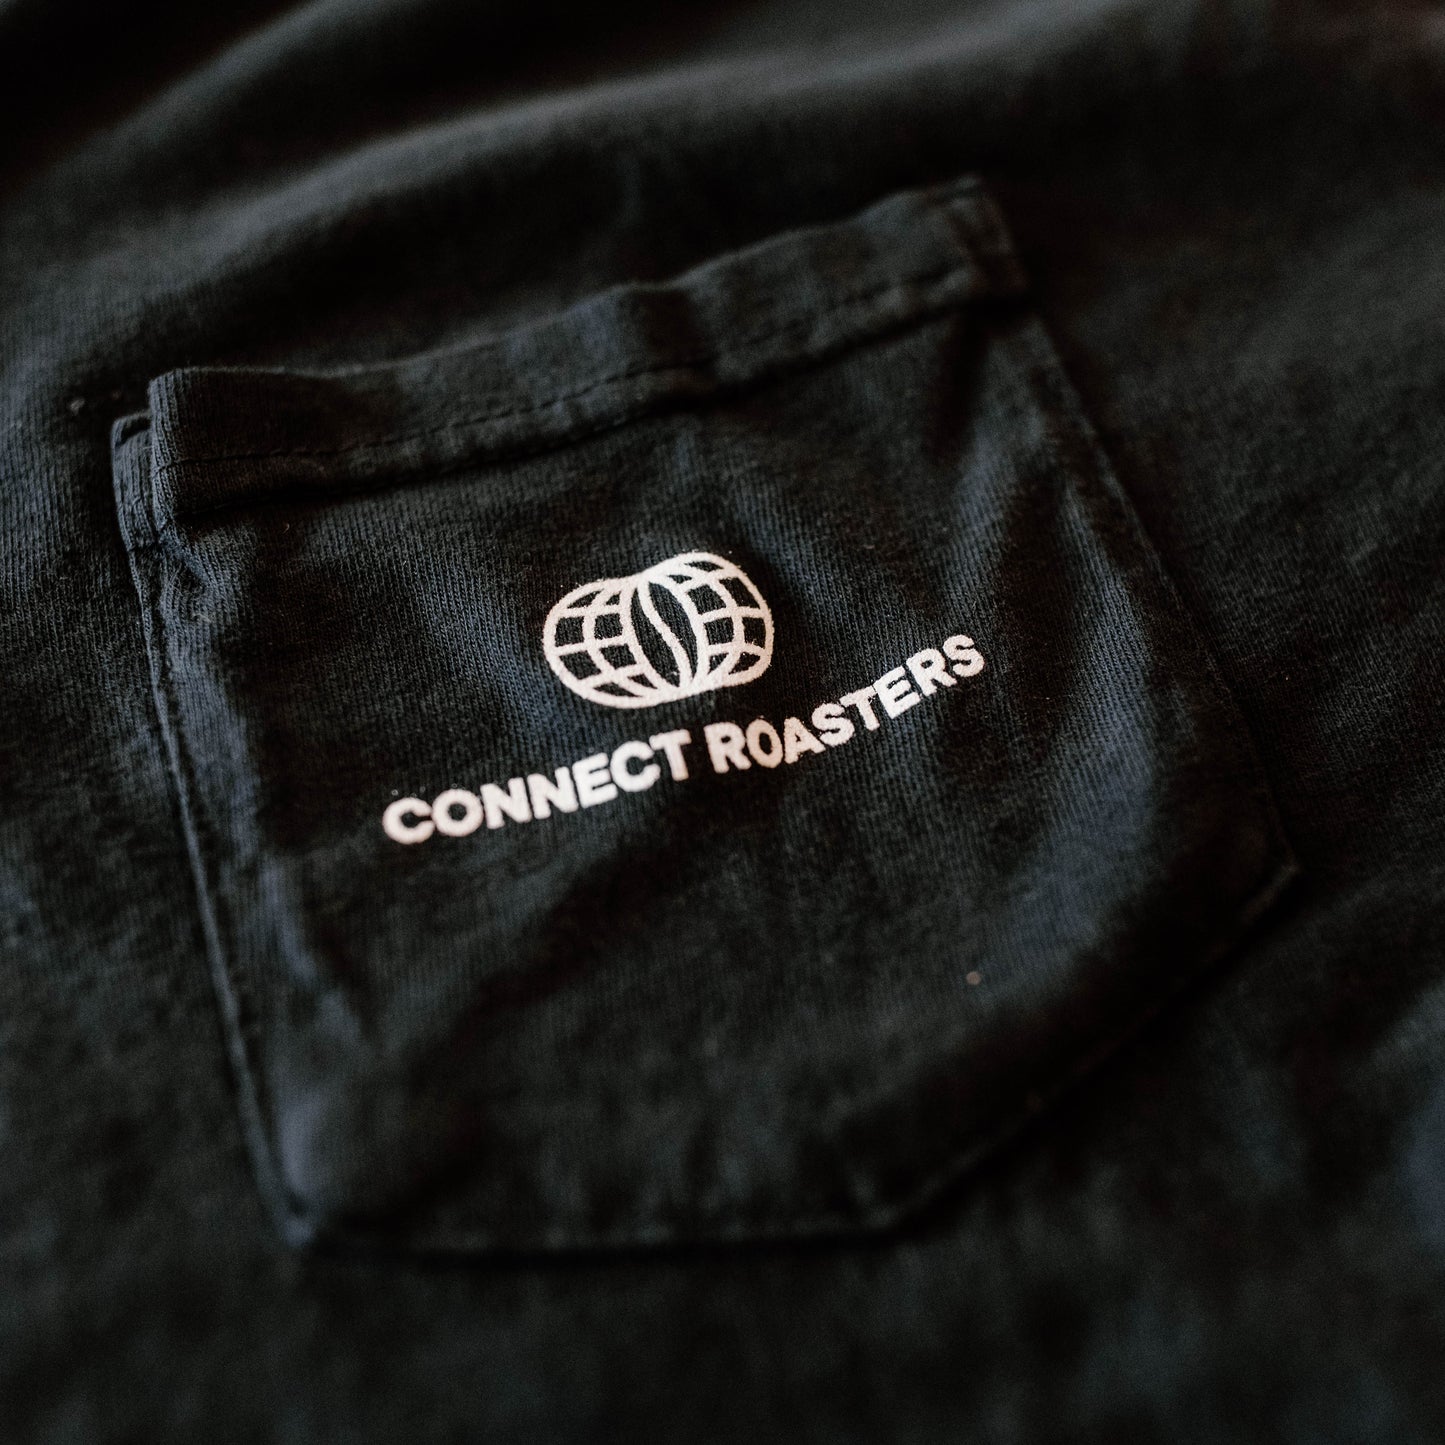 Connect Roasters Black Pocket T-Shirt